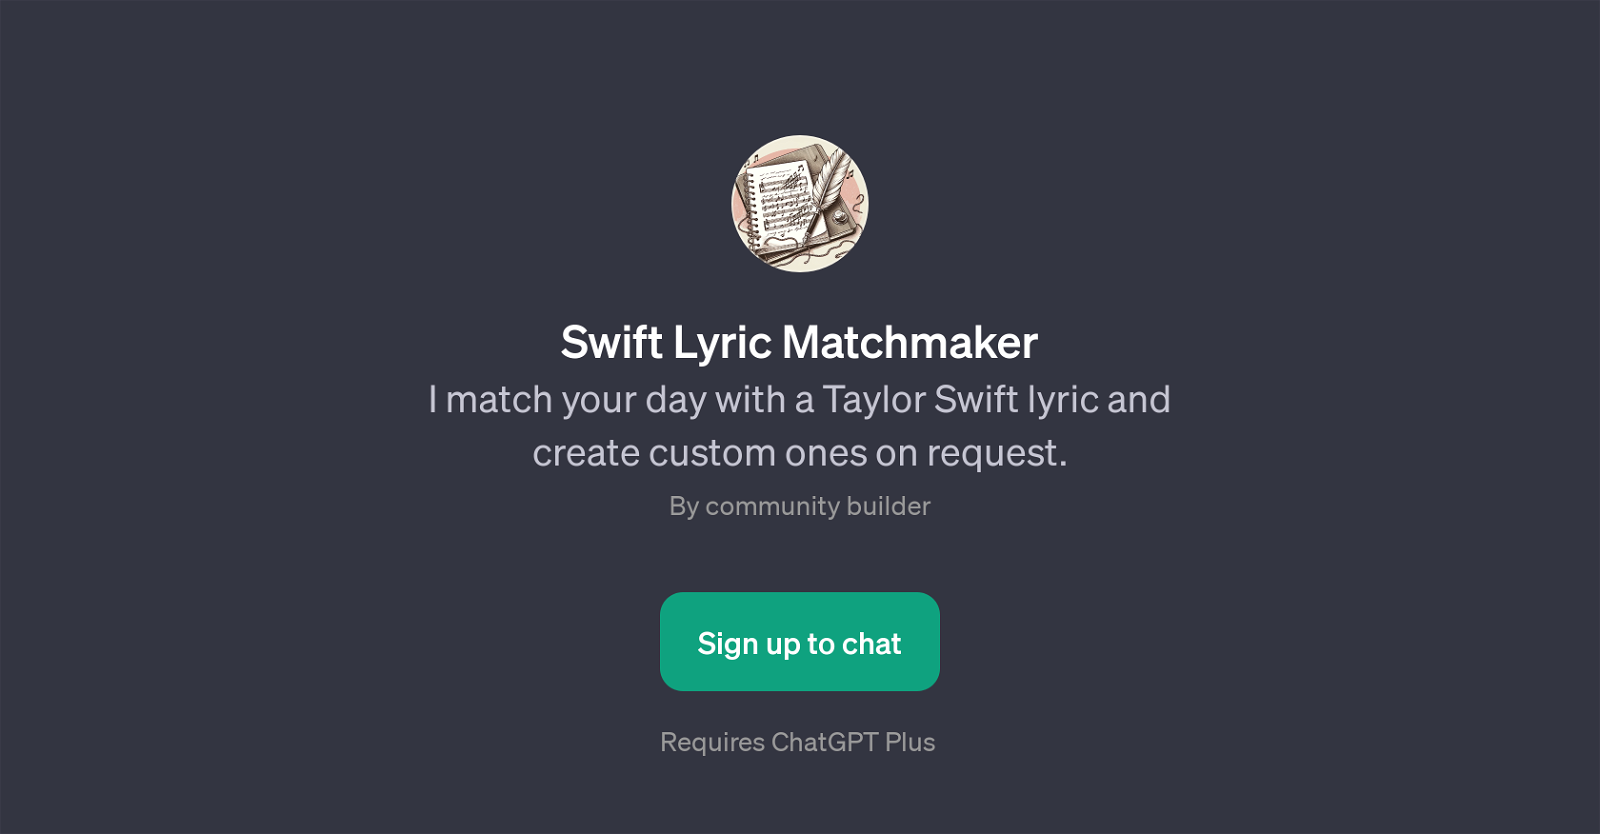 Swift Lyric Matchmaker website